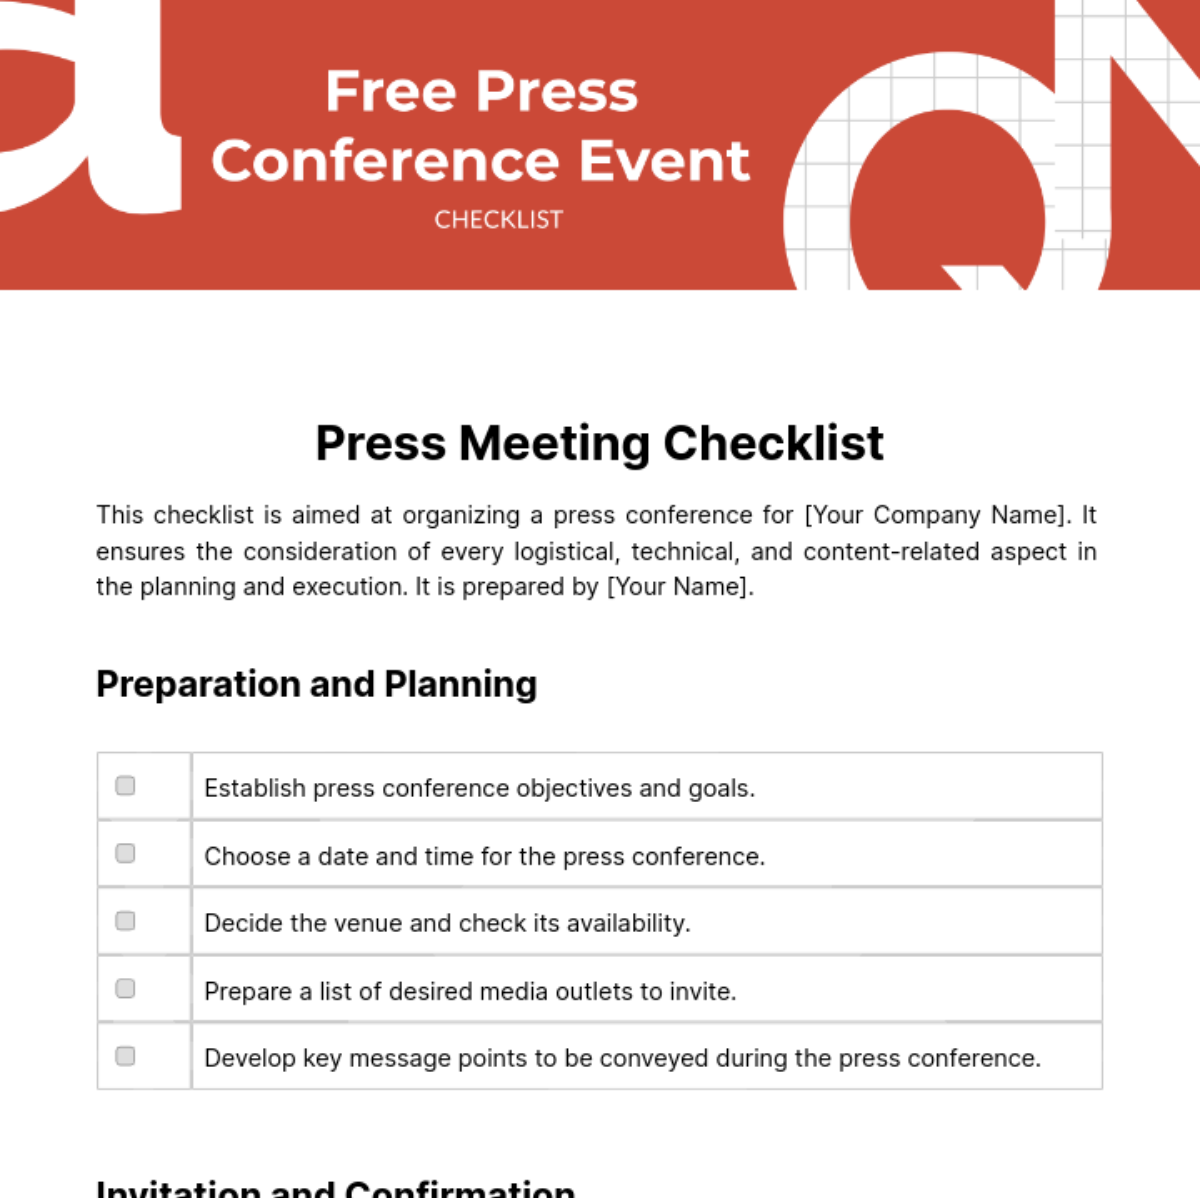 Free Press Conference Event Checklist Template